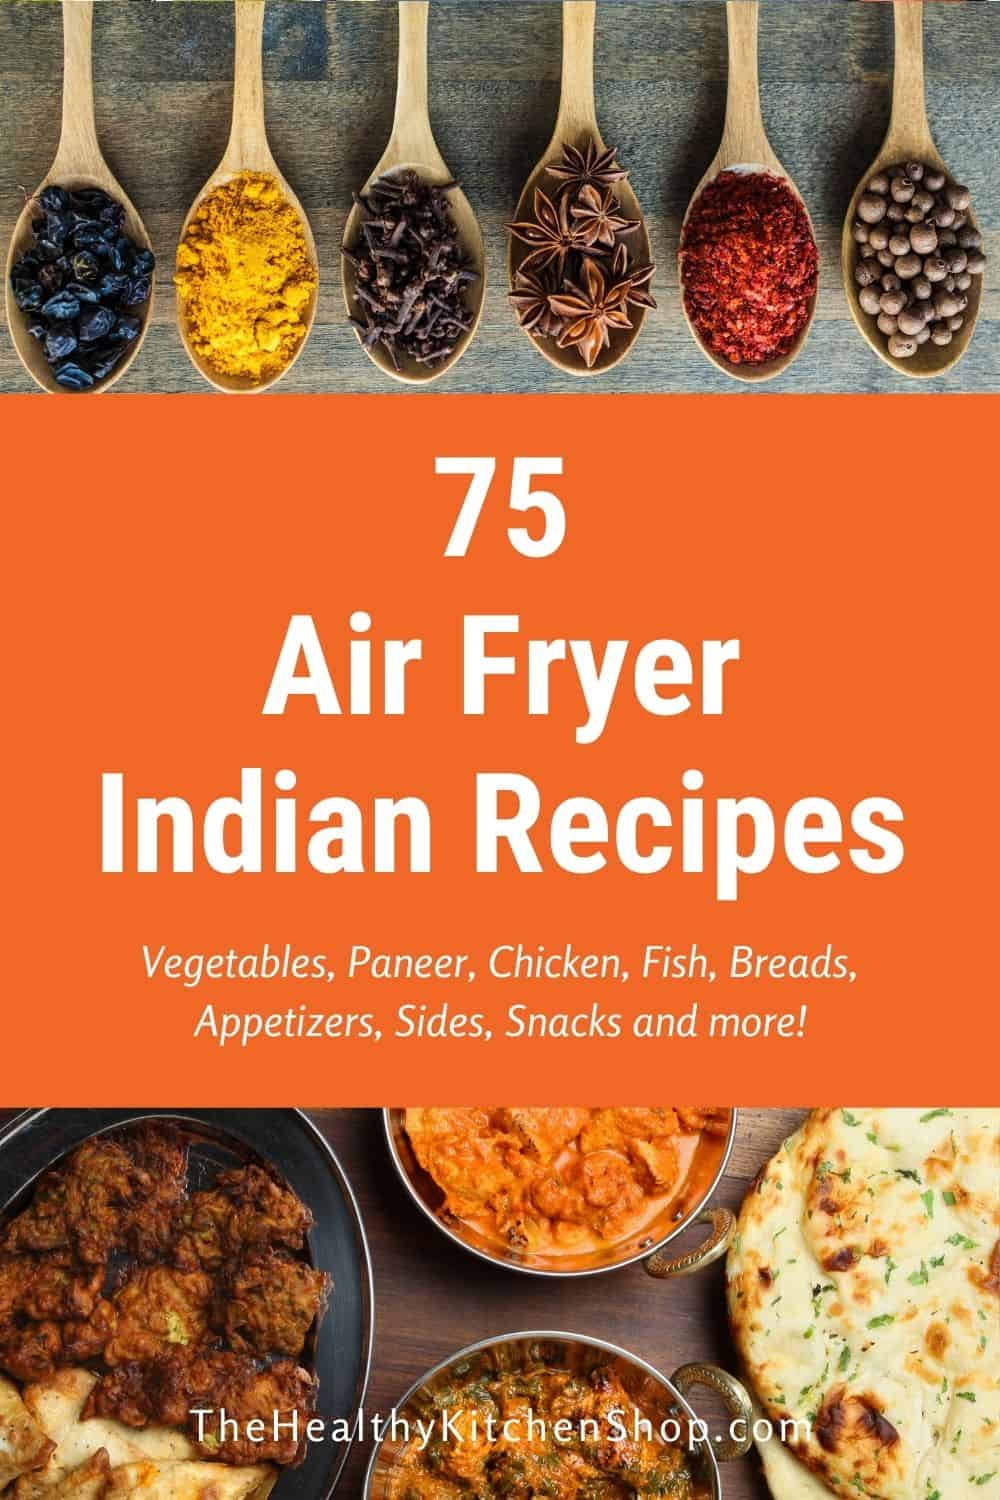 Air Fryer Indian Recipes